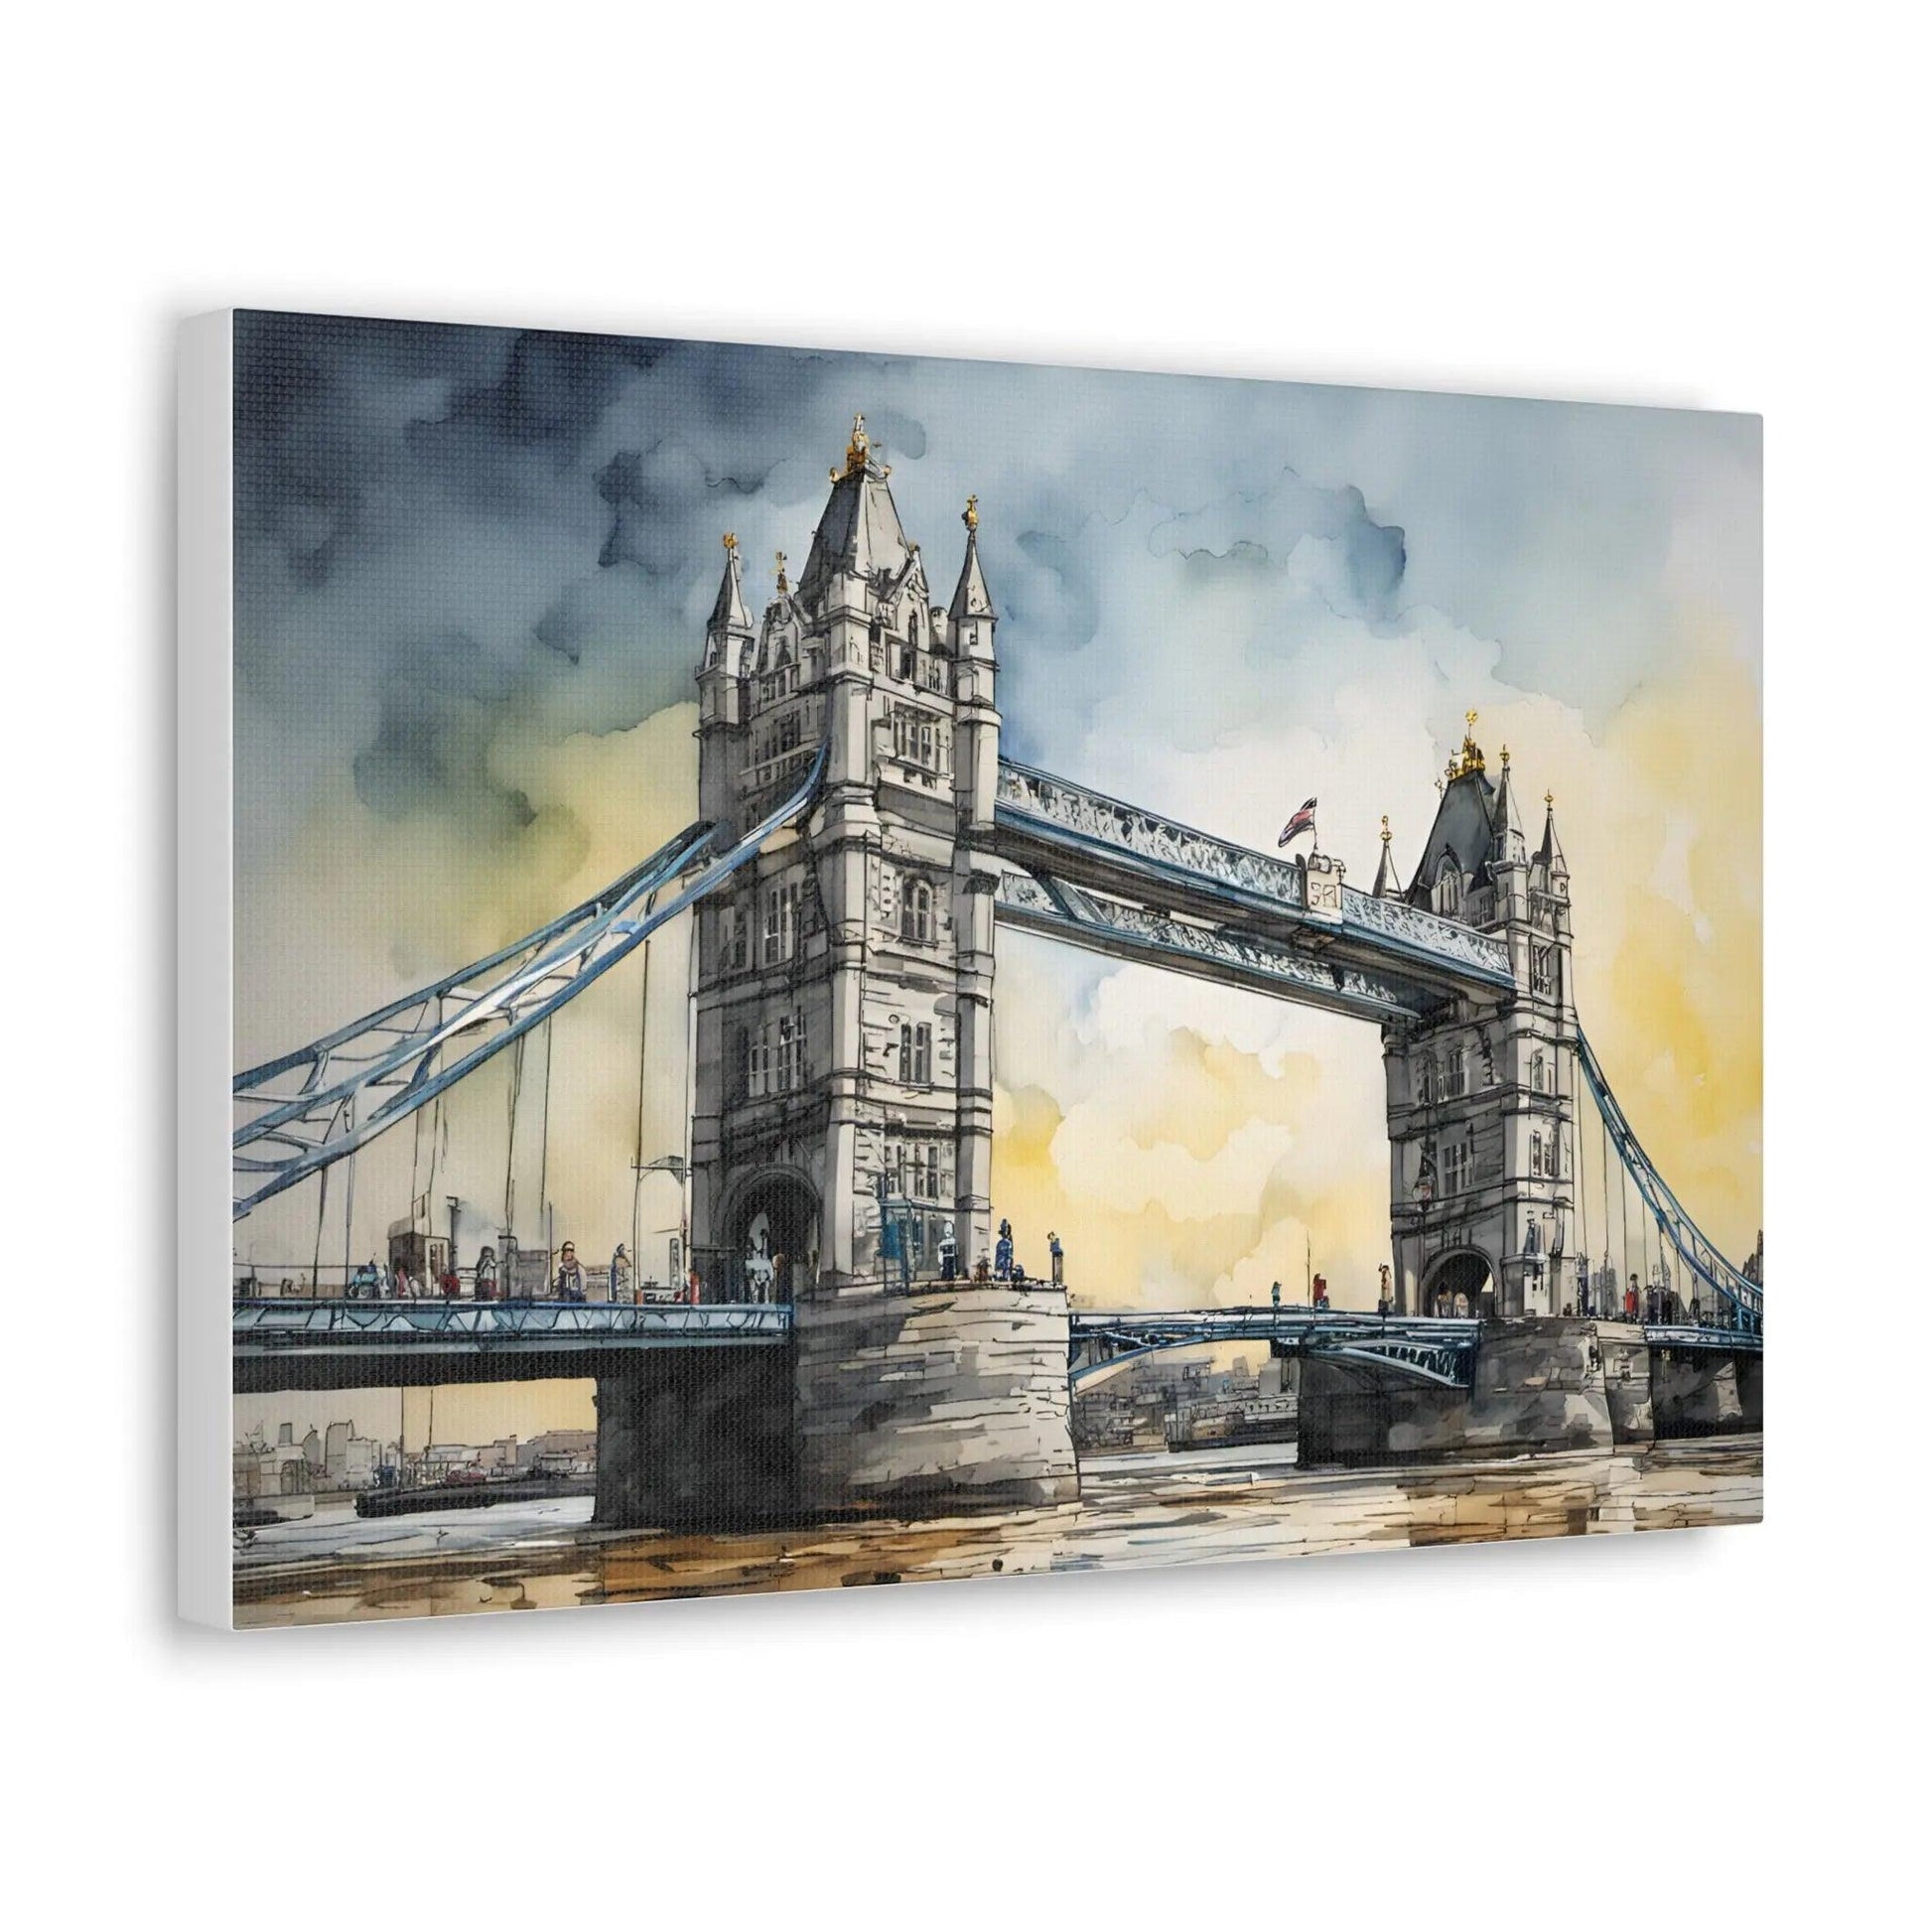 London Bridge-Canvas Gallery Wraps Canvas